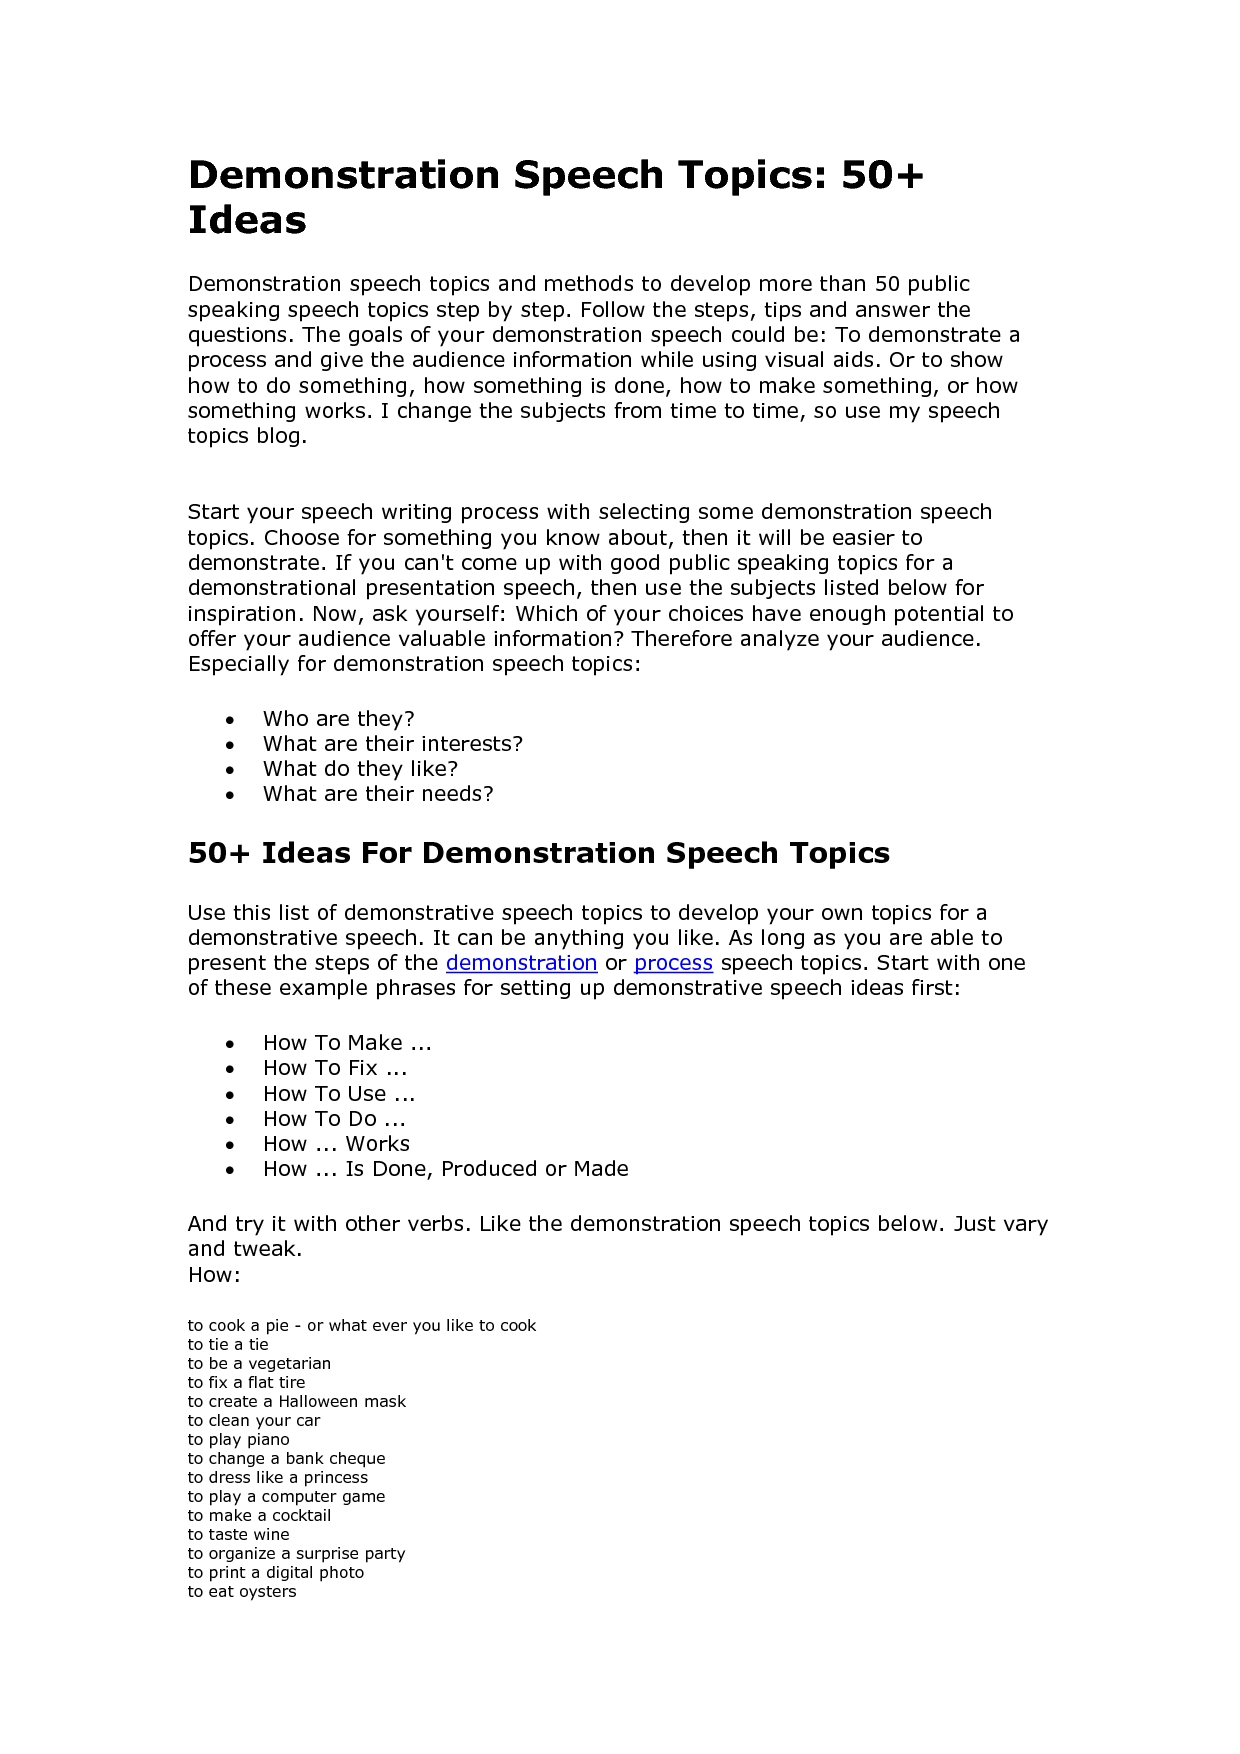 10 Fashionable Demonstration Speech Ideas For College Students outline demonstration speech topics google search school 12 2022